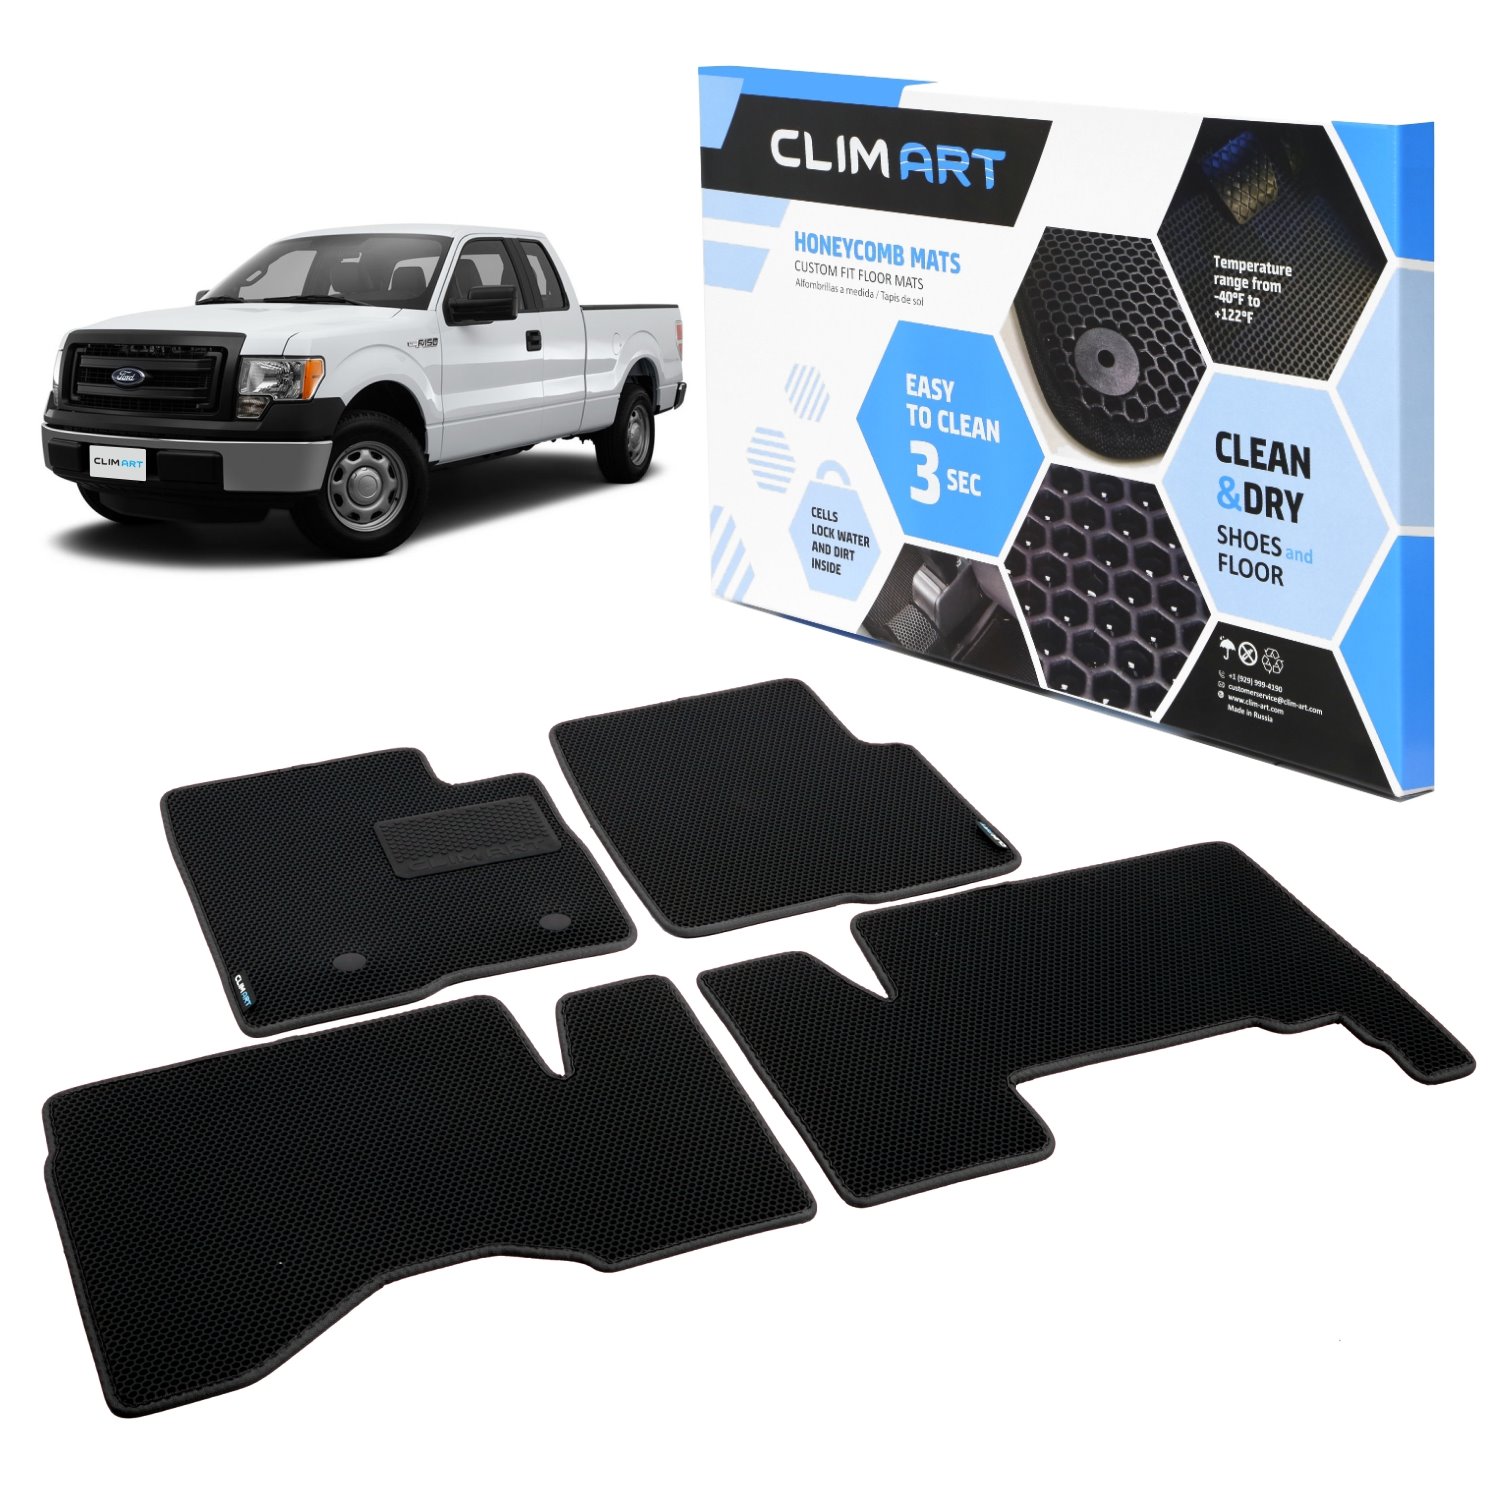 CLIM ART Honeycomb Custom Fit Floor Mats for 2009-2014 Ford F-150 SuperCab